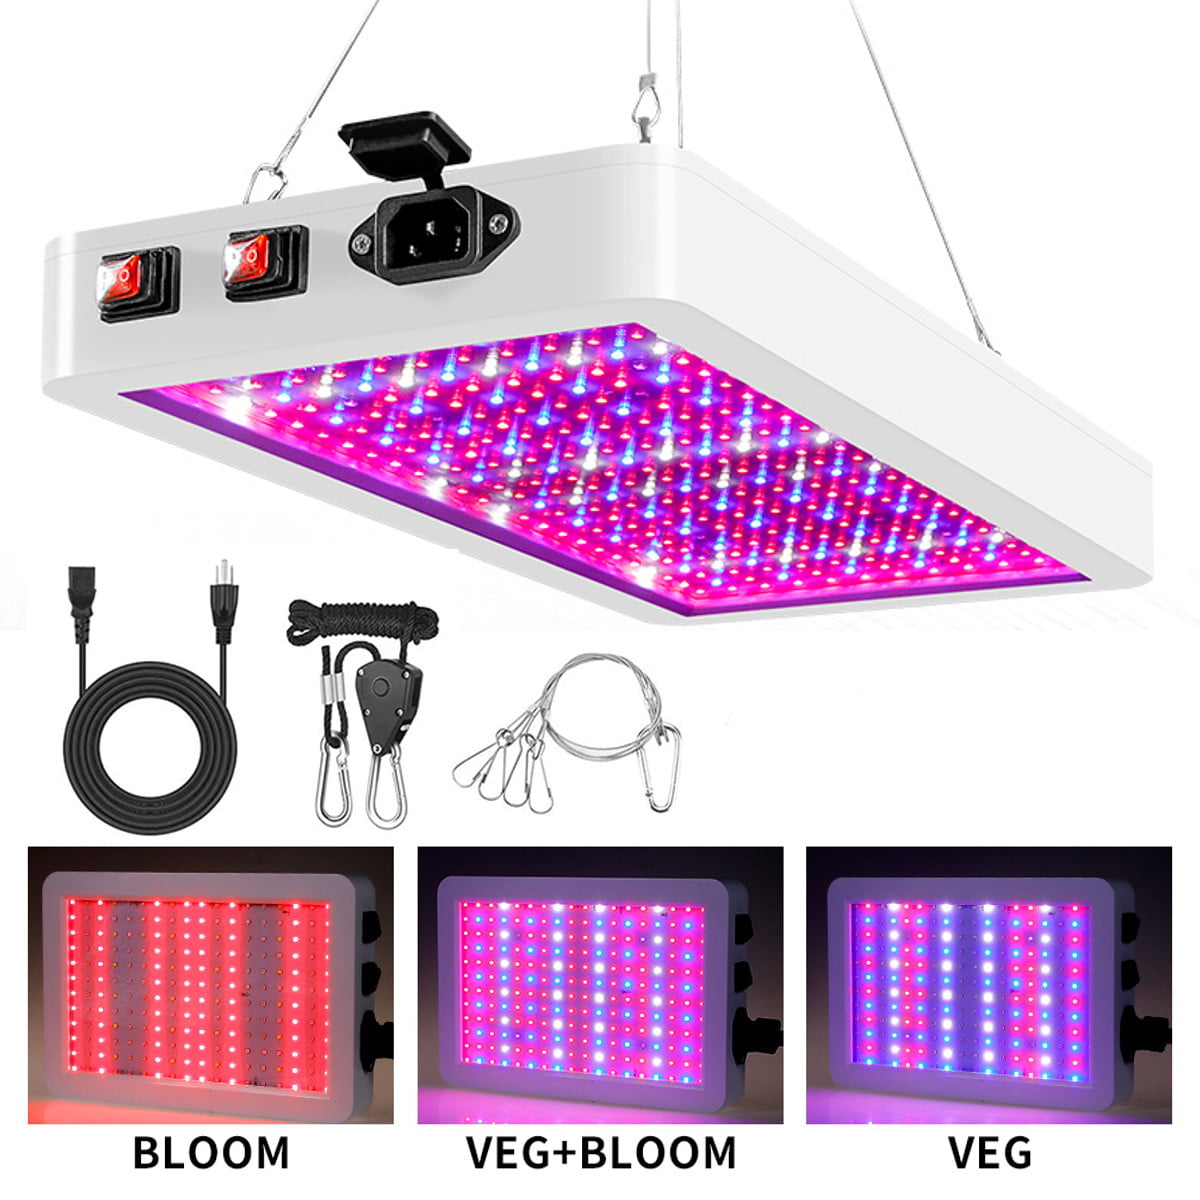 8000W LED Grow Light Full Spectrum Hydroponic Indoor Plant Veg Bloom Flower Lamp 